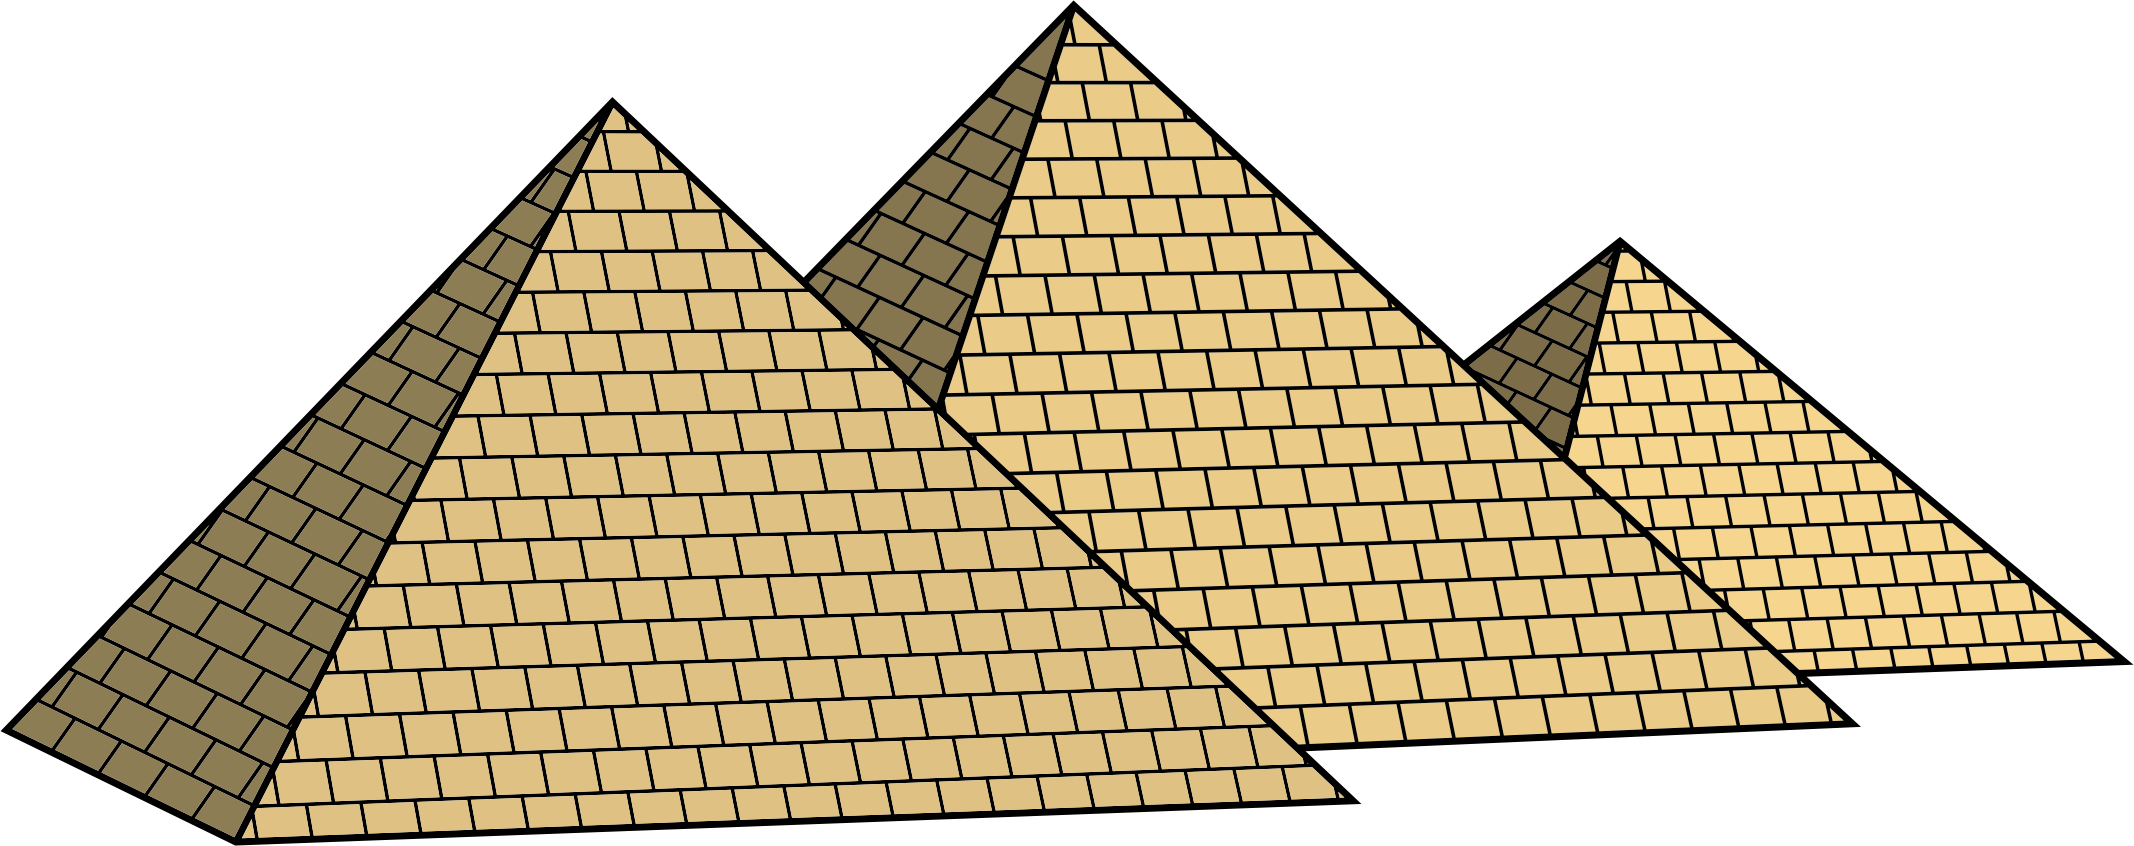 Big Image (Png) - Egyptian Pyramid, Transparent background PNG HD thumbnail